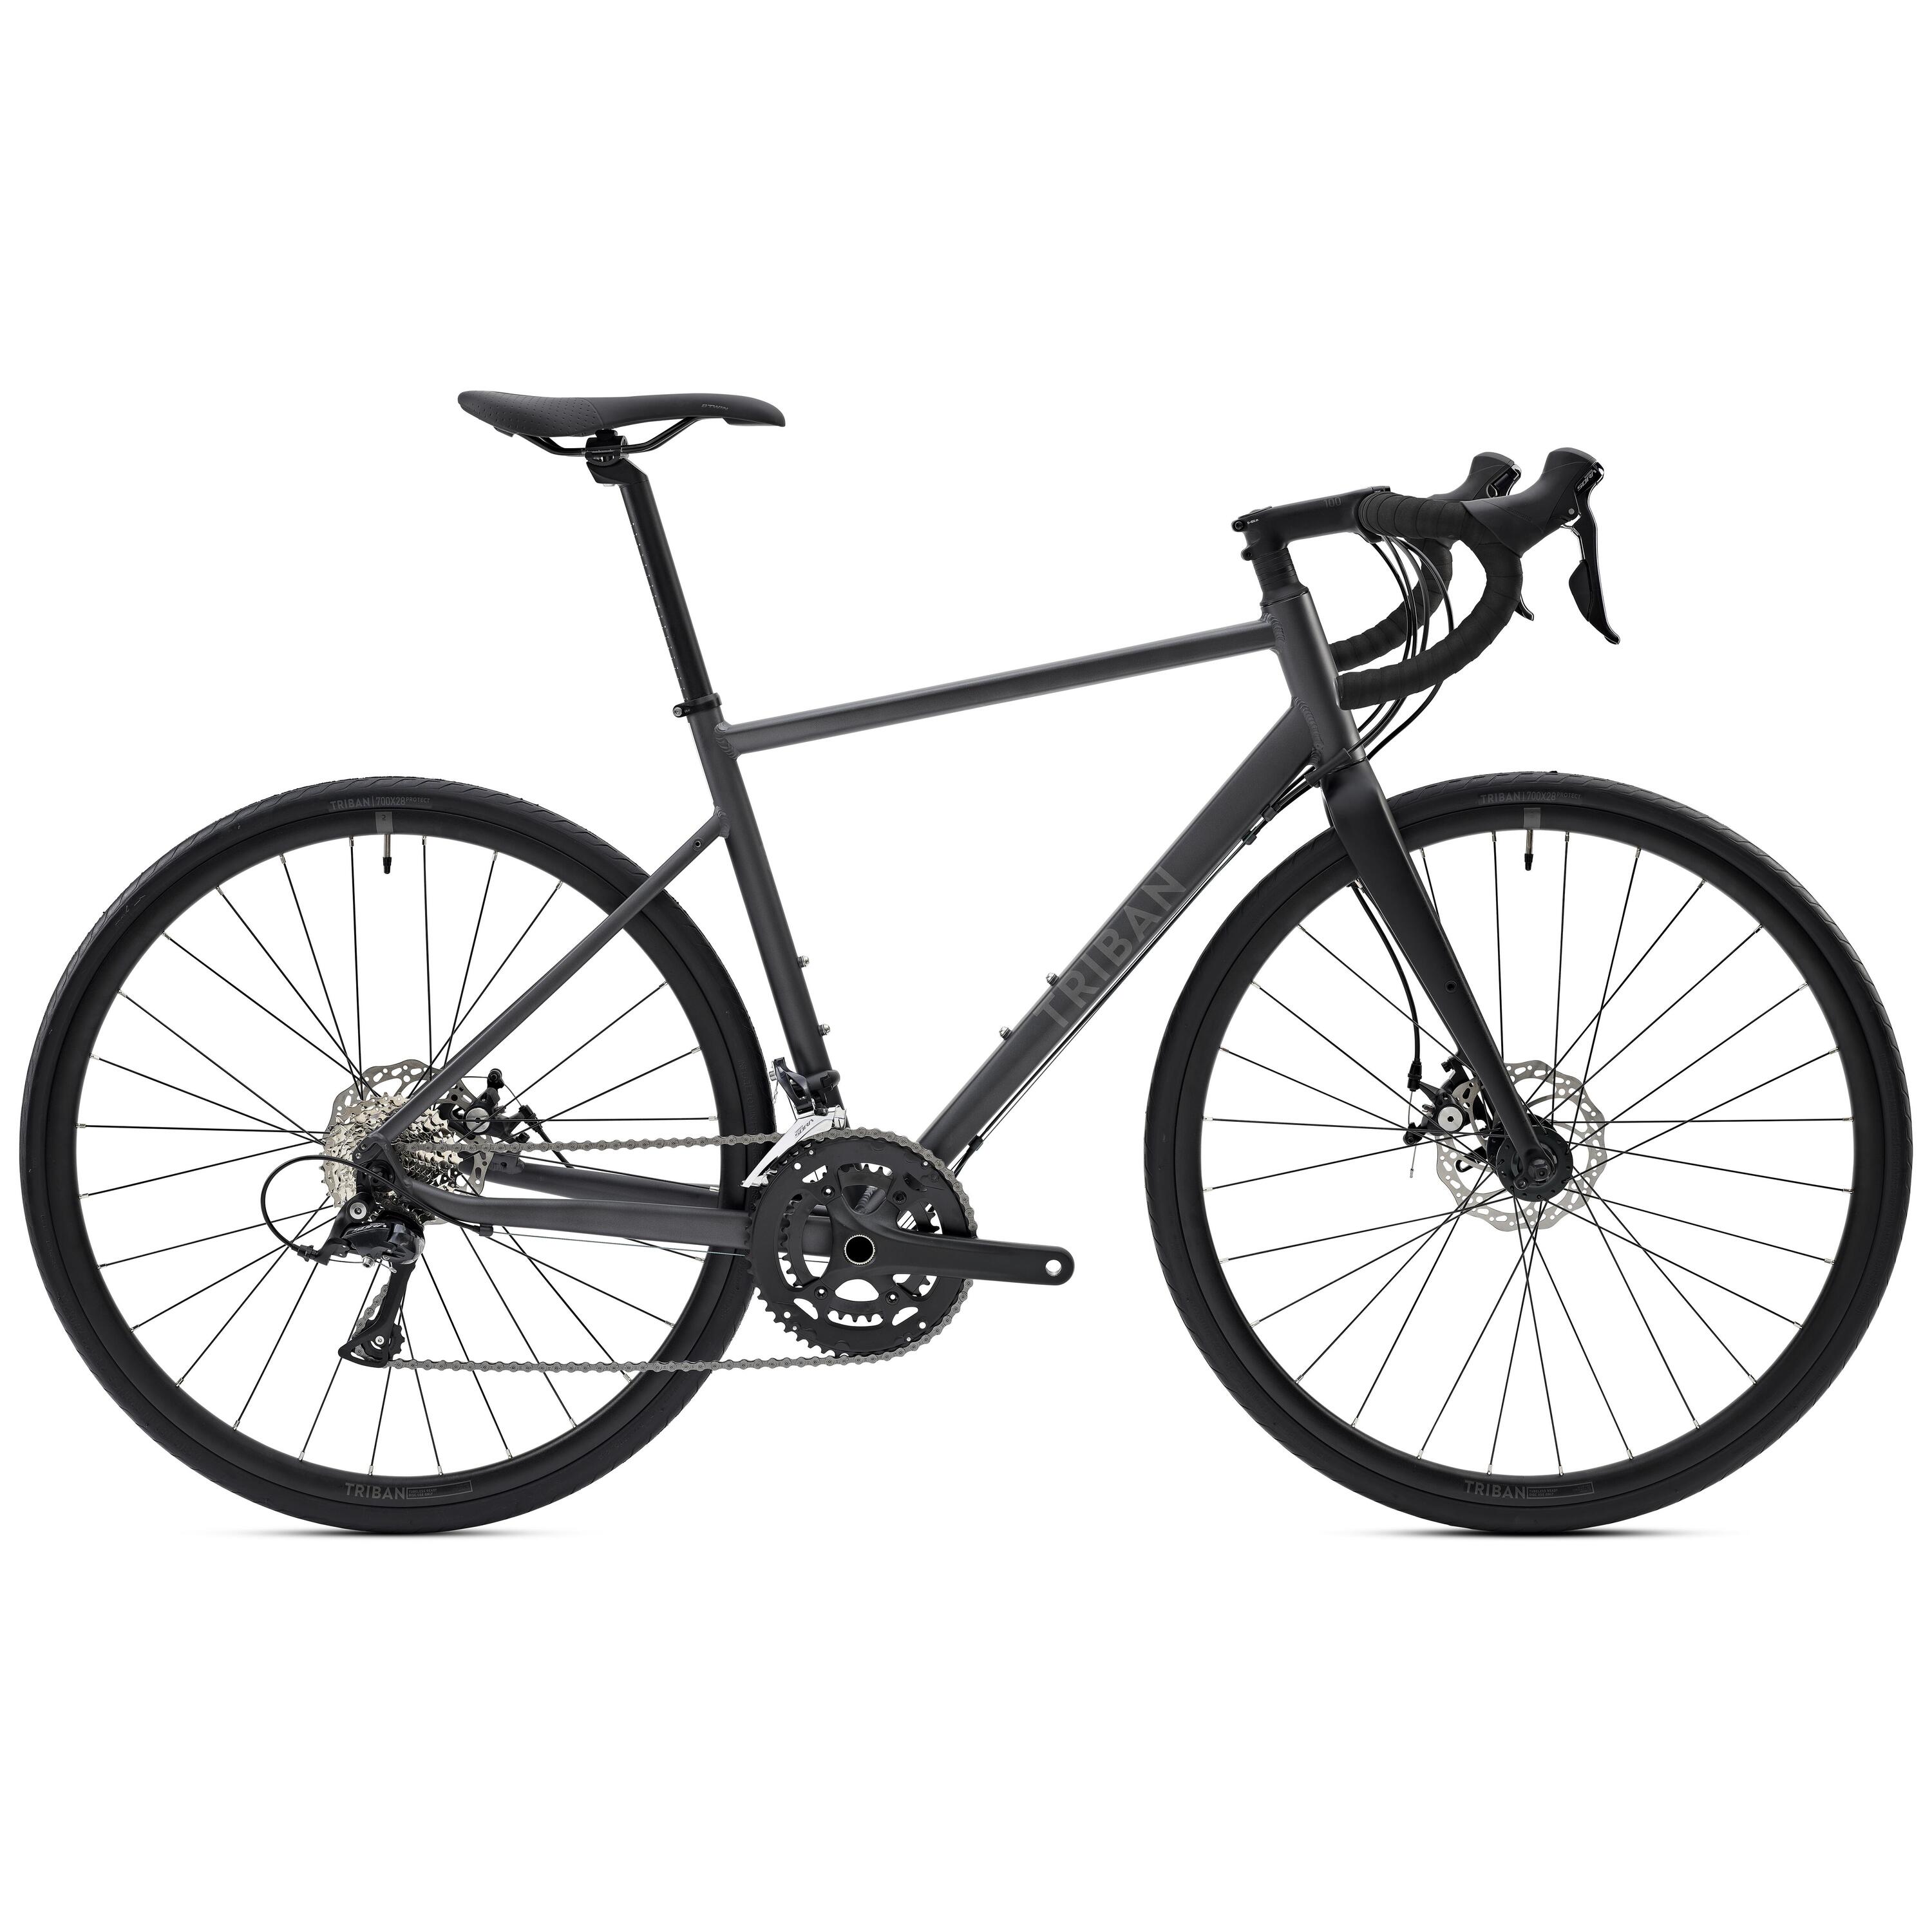 VAN RYSEL Road bike Triban RC 500 disc brake Sora/Prowheel - XS/S/M - Black